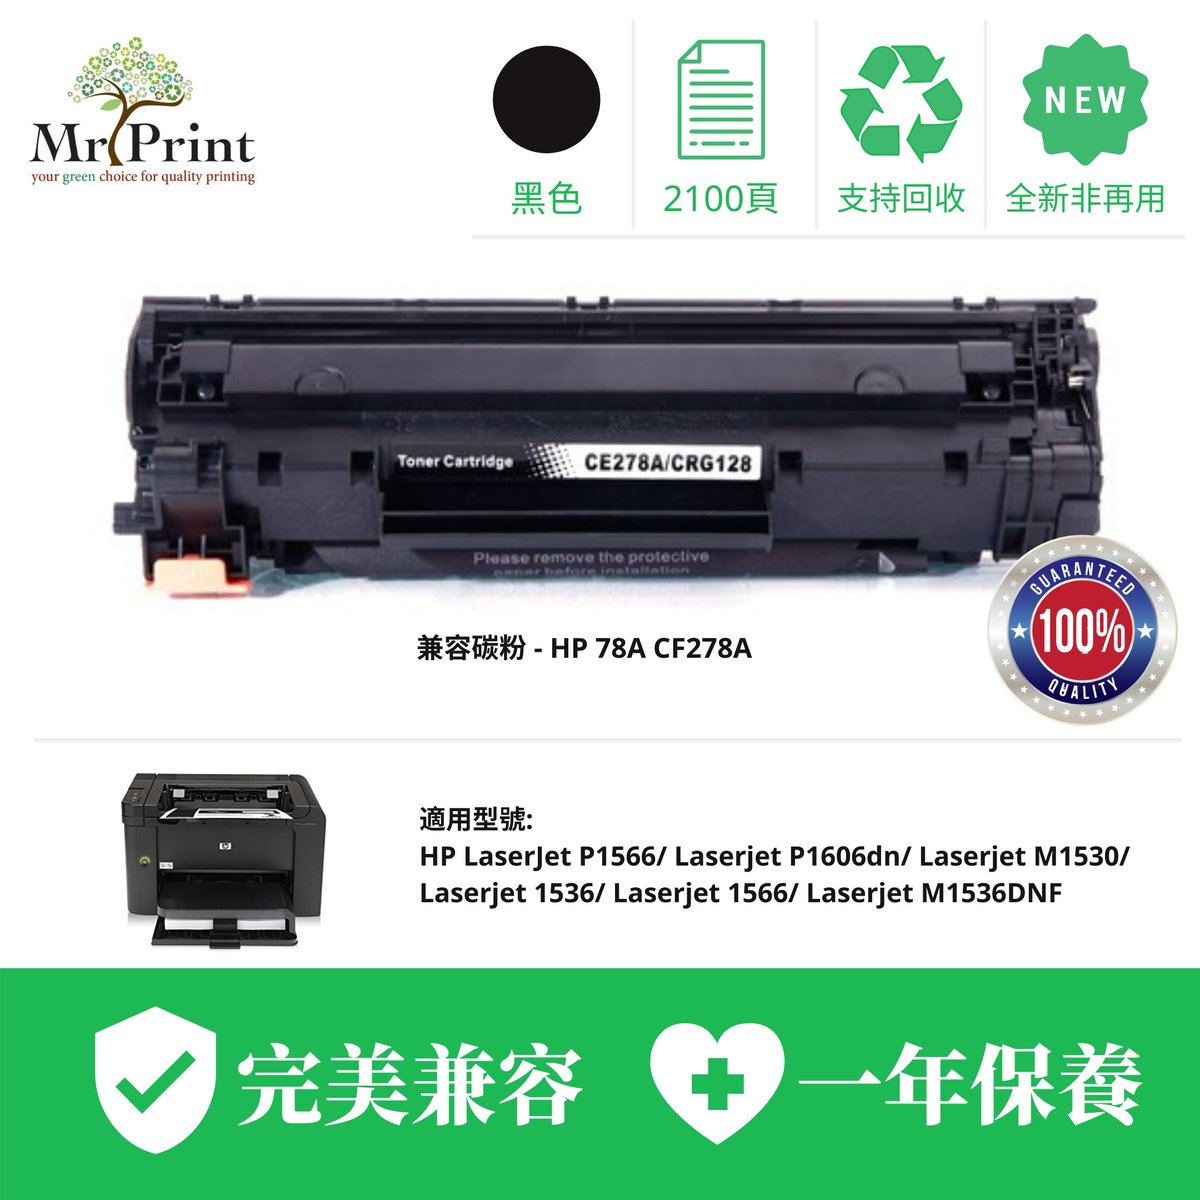 Mr Print Hp 78a Ce278a 黑色代用碳粉 P1606dn M1530 1536 1566 M1536dnf 香港電視hktvmall 網上購物